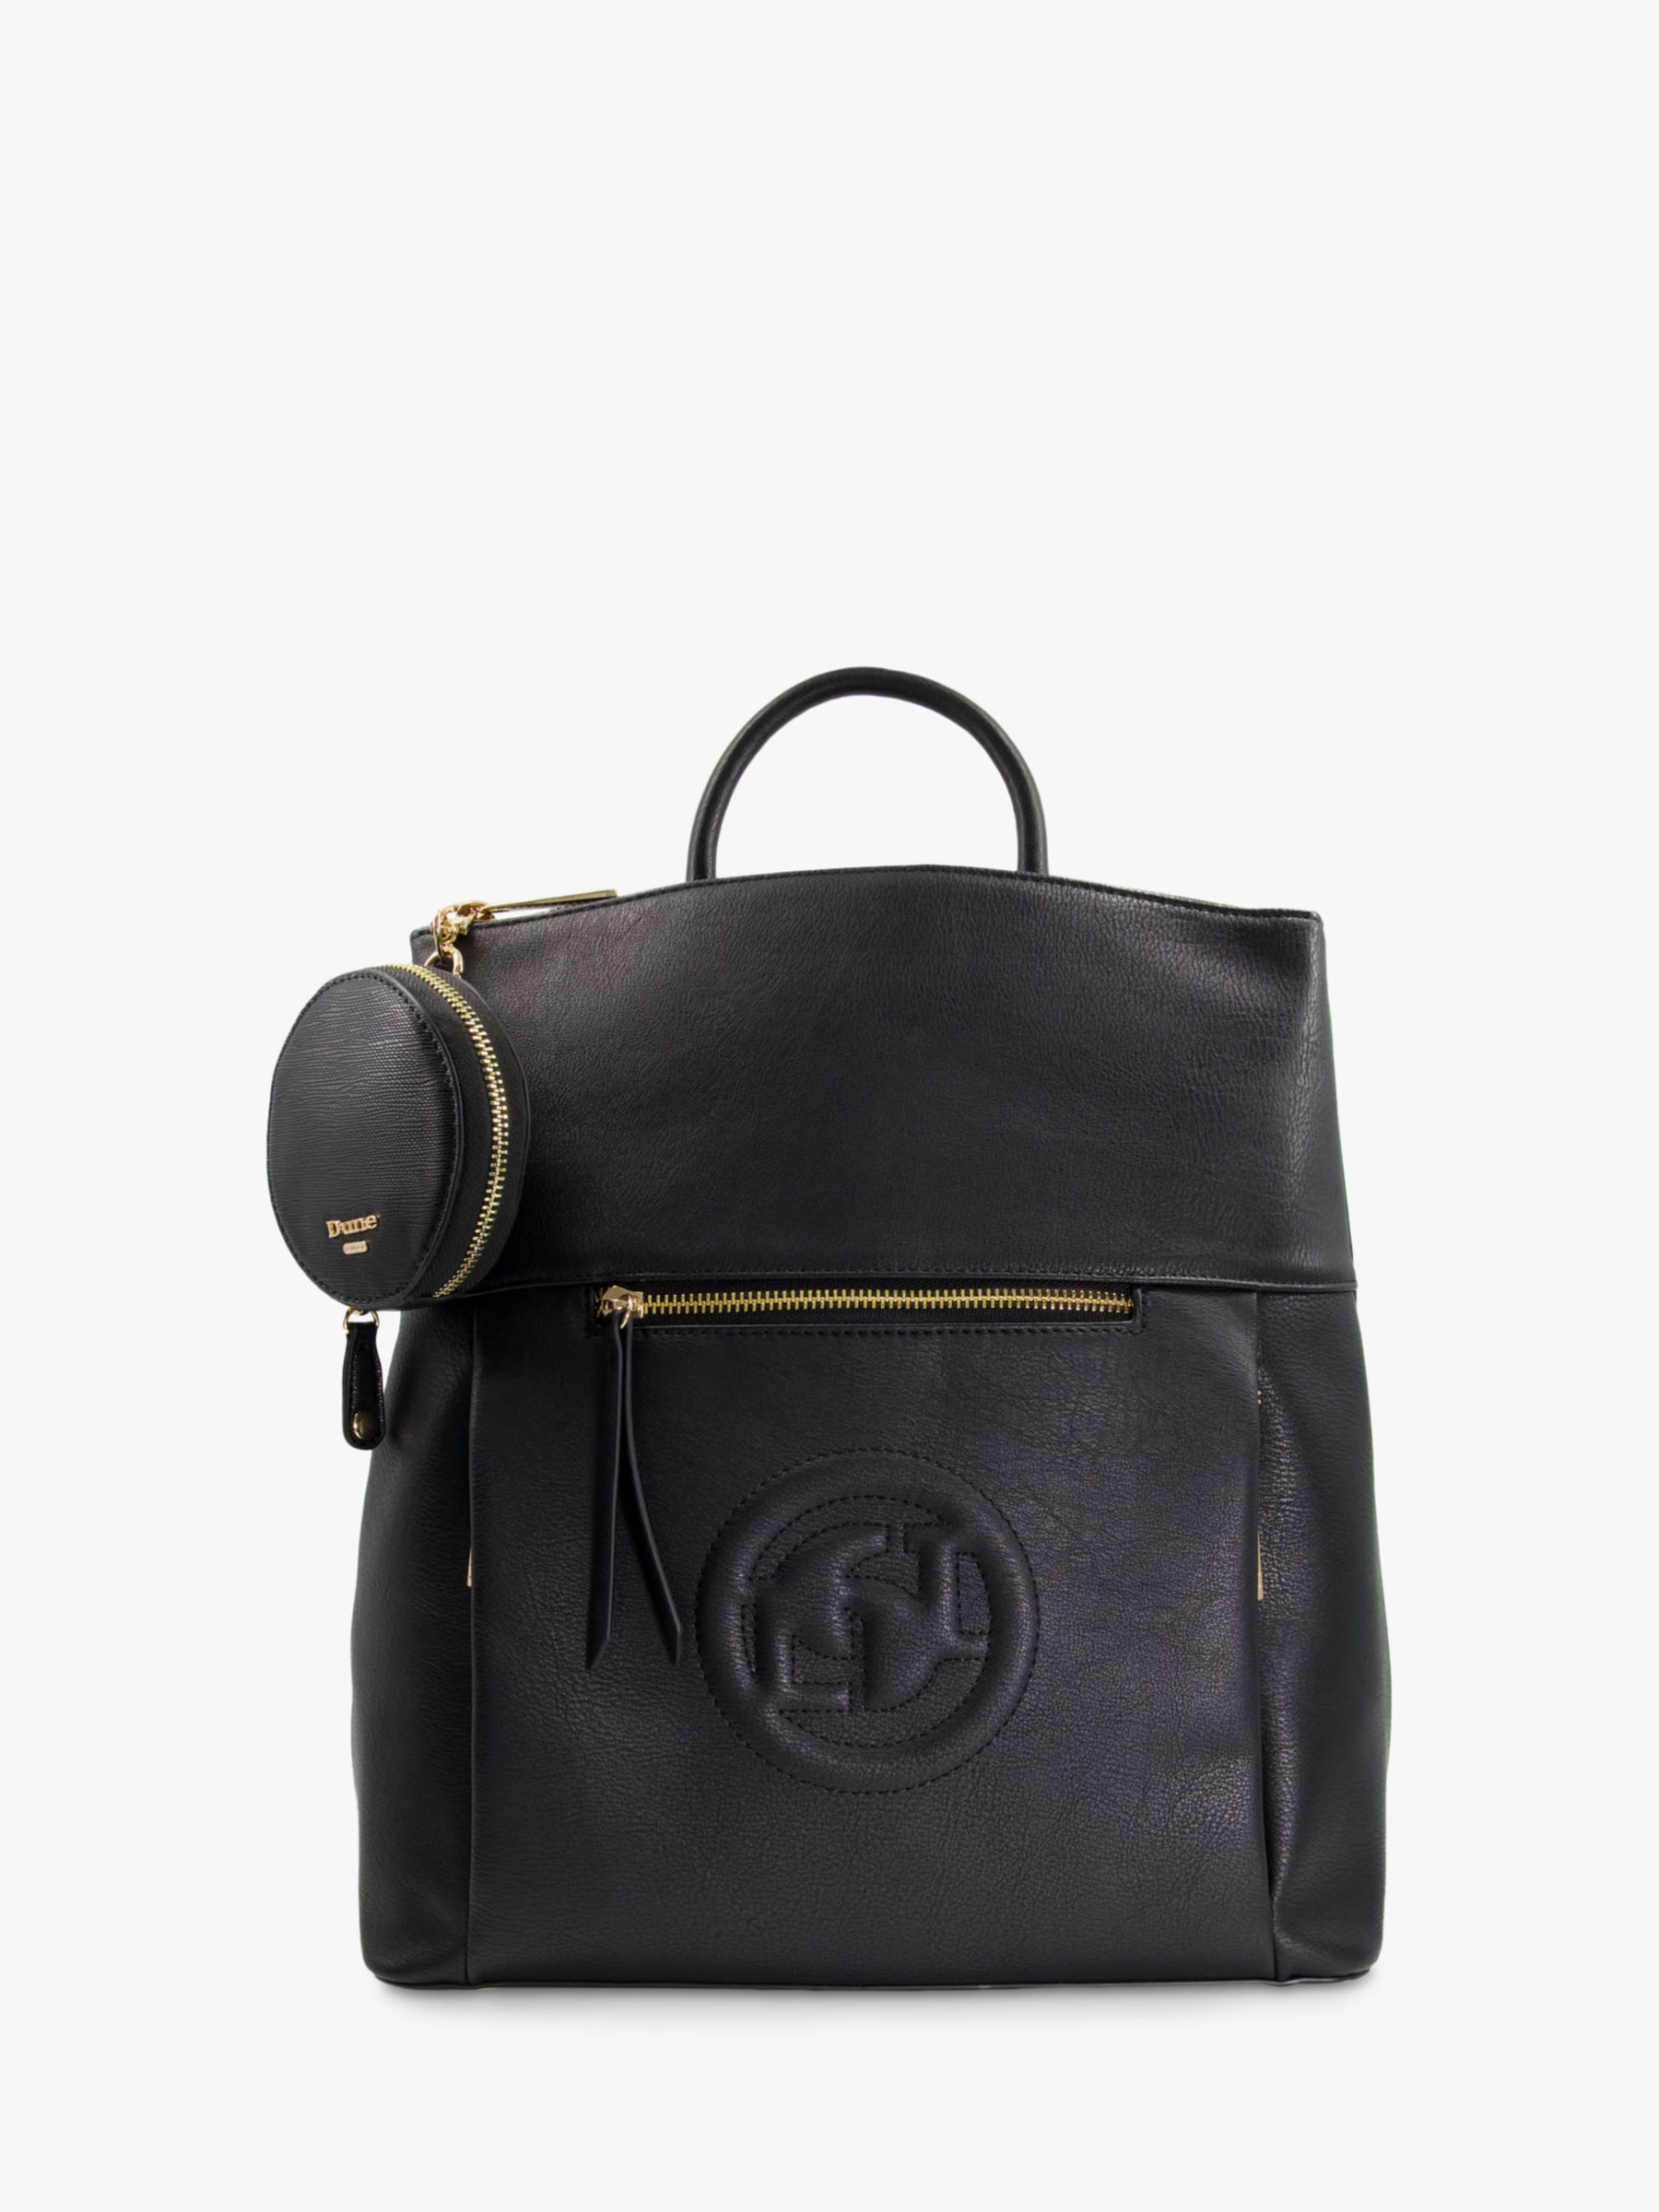 Dartmouth Leather Backpack, Black Barker